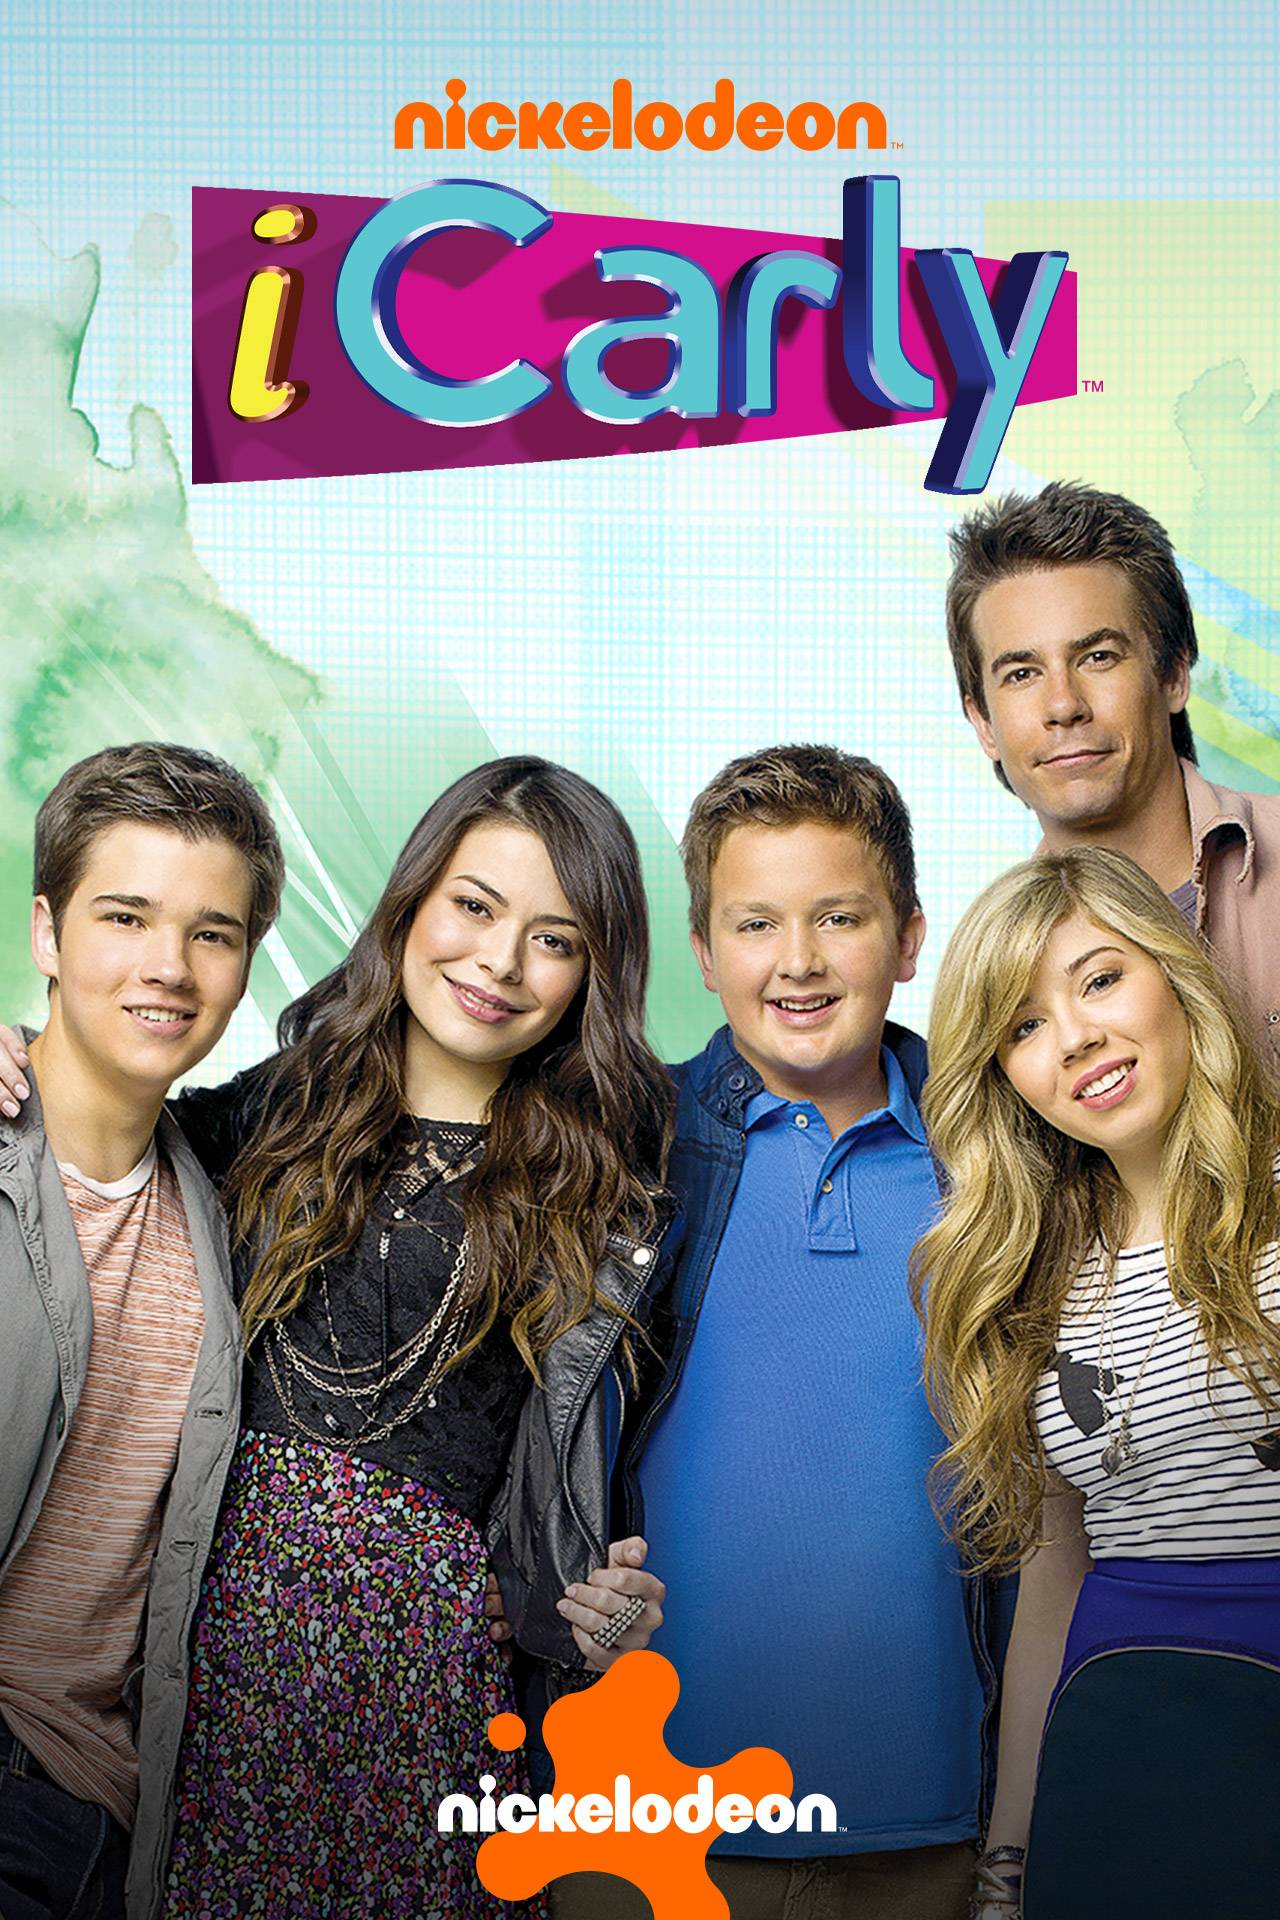 iCarly - Season 5 - TV Series